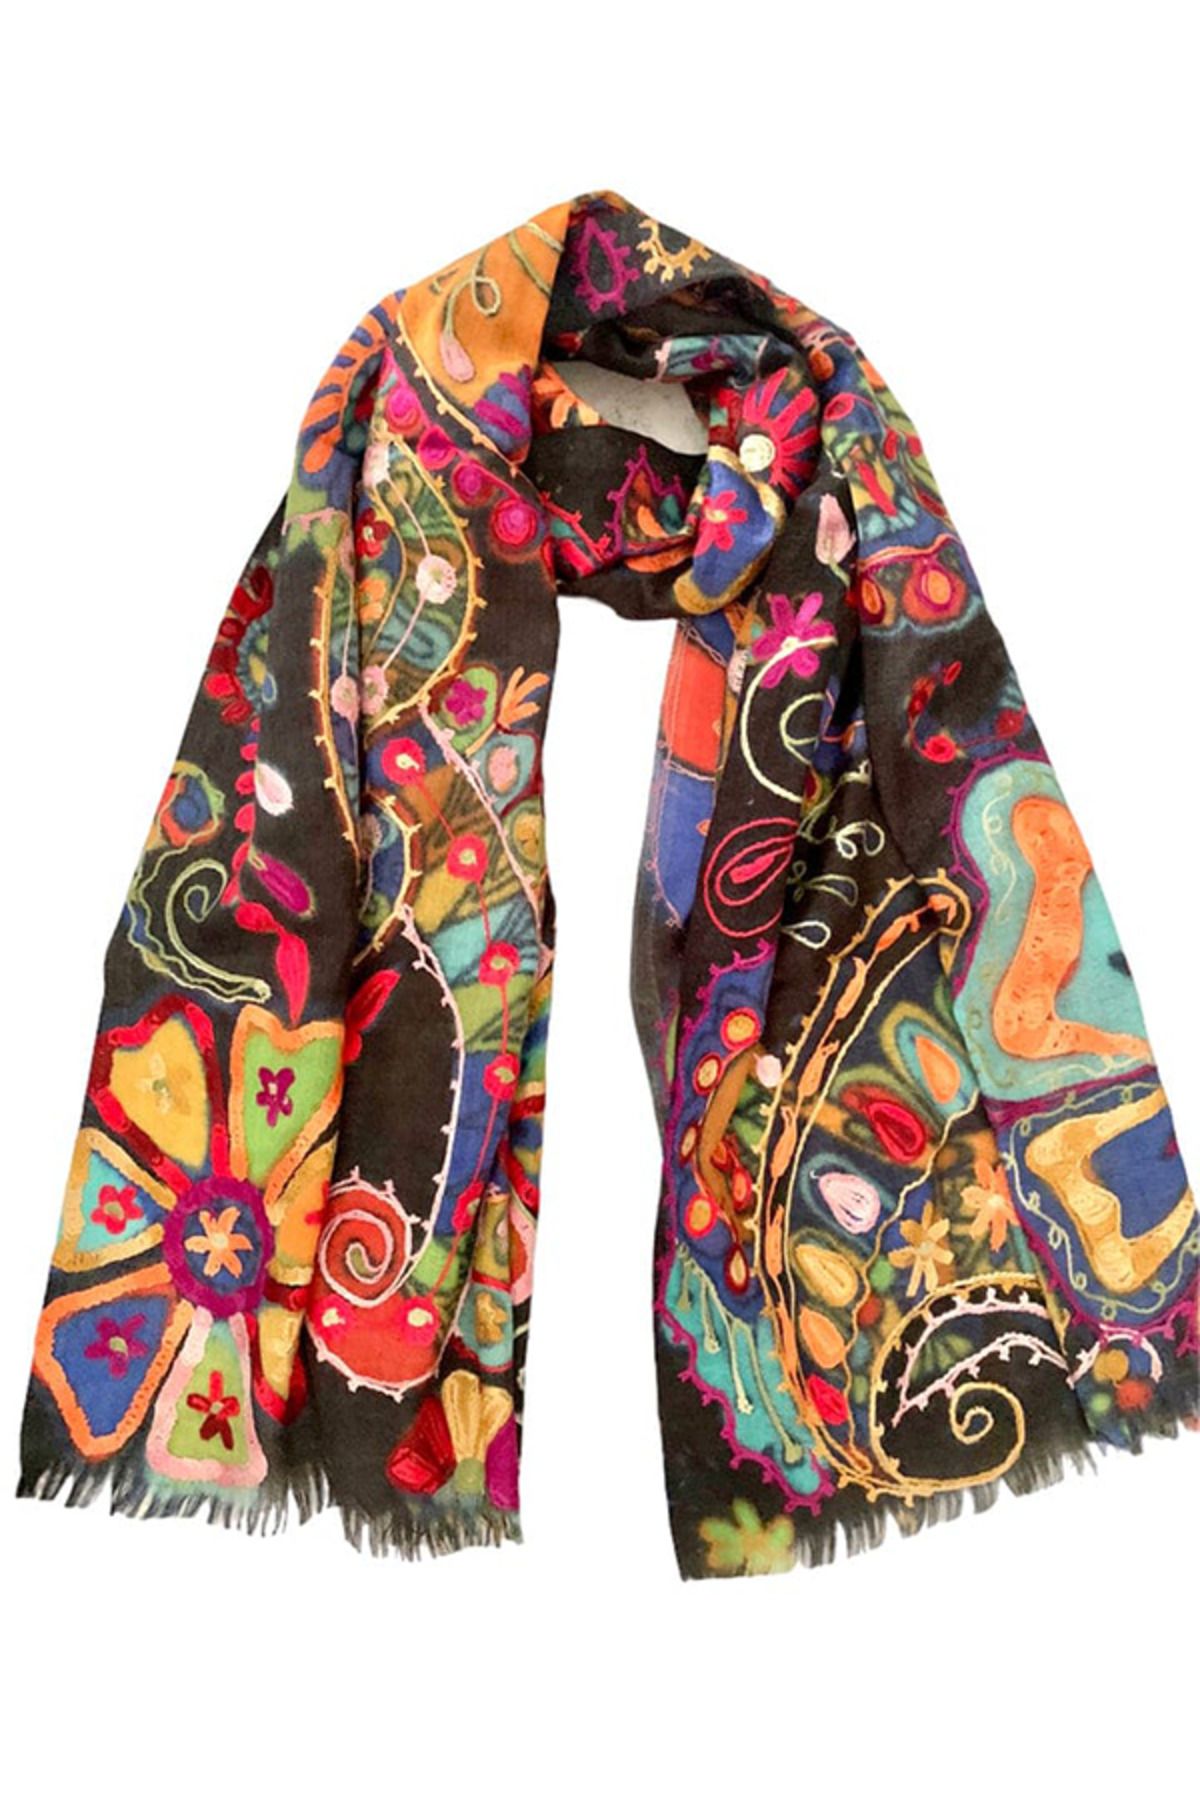 fiore fashion çiçek şal Cashmere boiled wool shawl knitted şal embroidered scarf cashmere shawl-flower